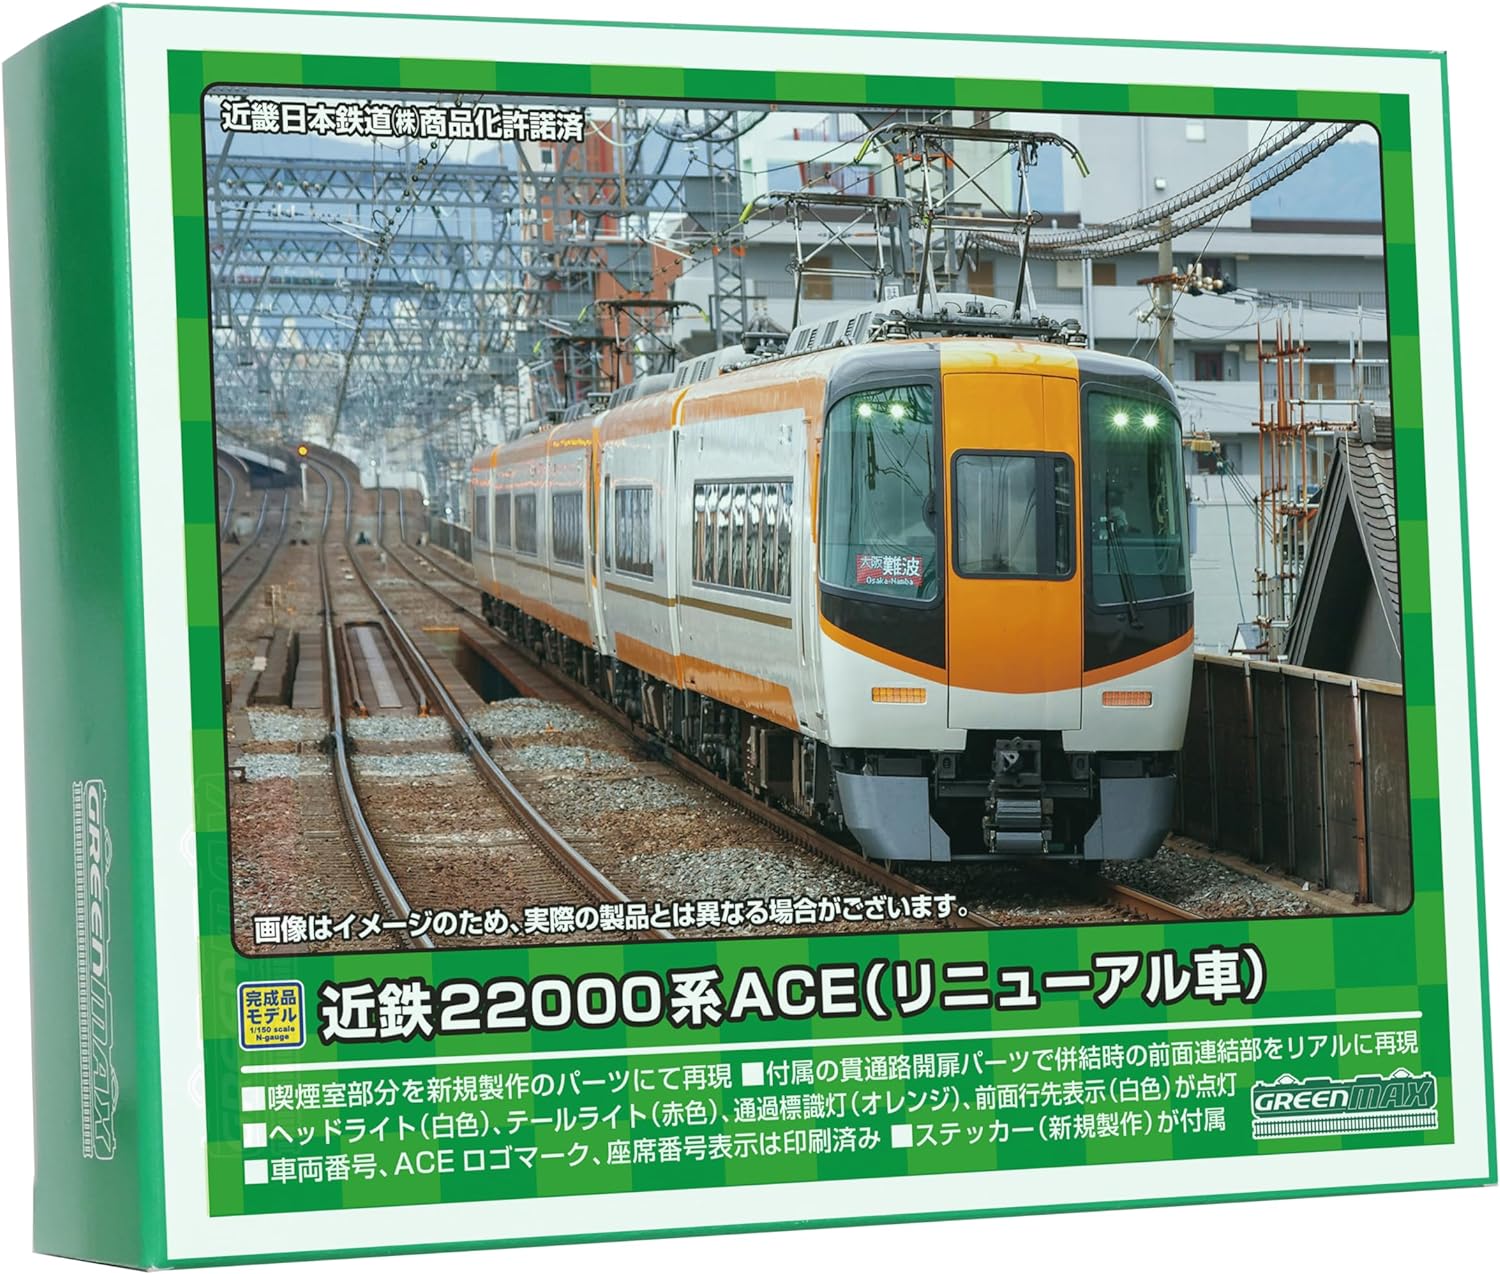 GreenMax 31790 N Gauge Kintetsu 22000 Series ACE (Renewal Car) Basic 4-Car Construction Set (with Power) Train - BanzaiHobby